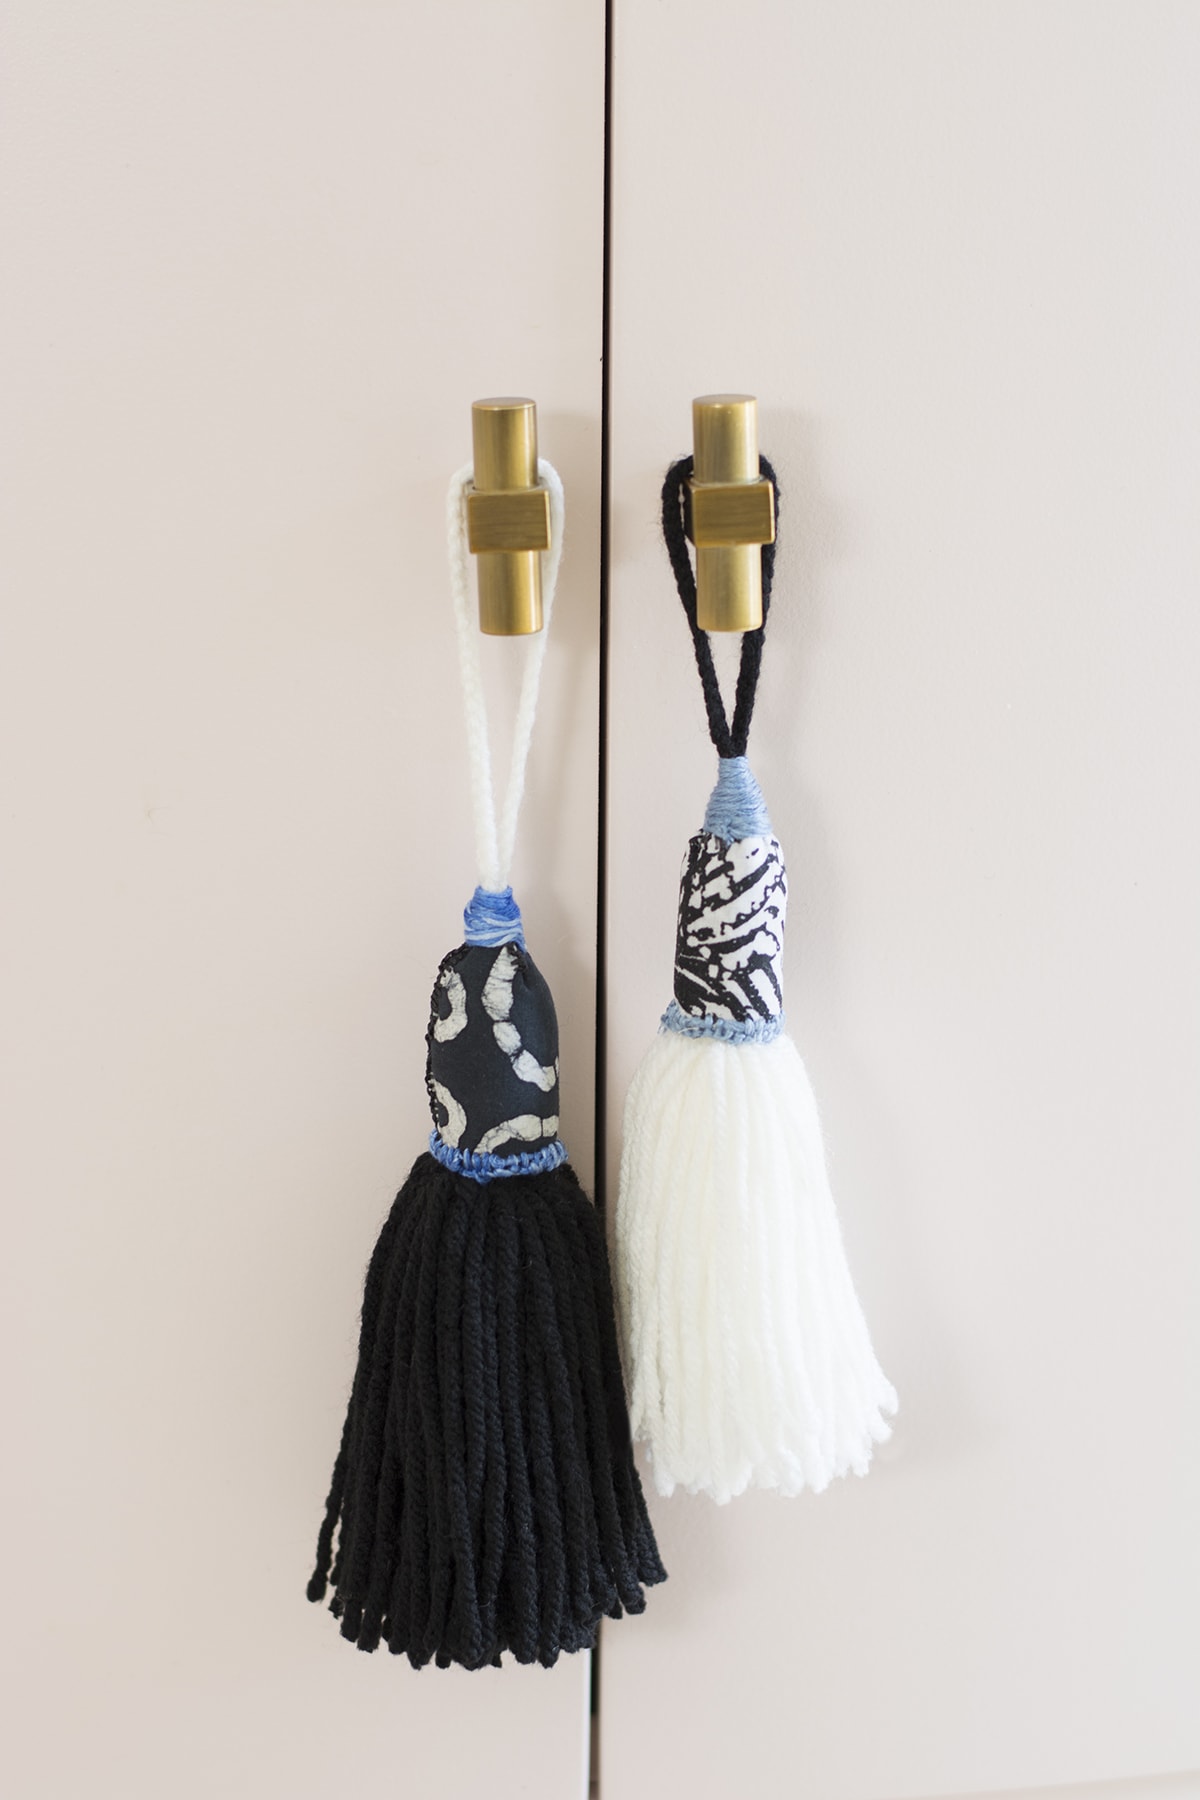 finished colorful yarn tassels hanging on dresser handle